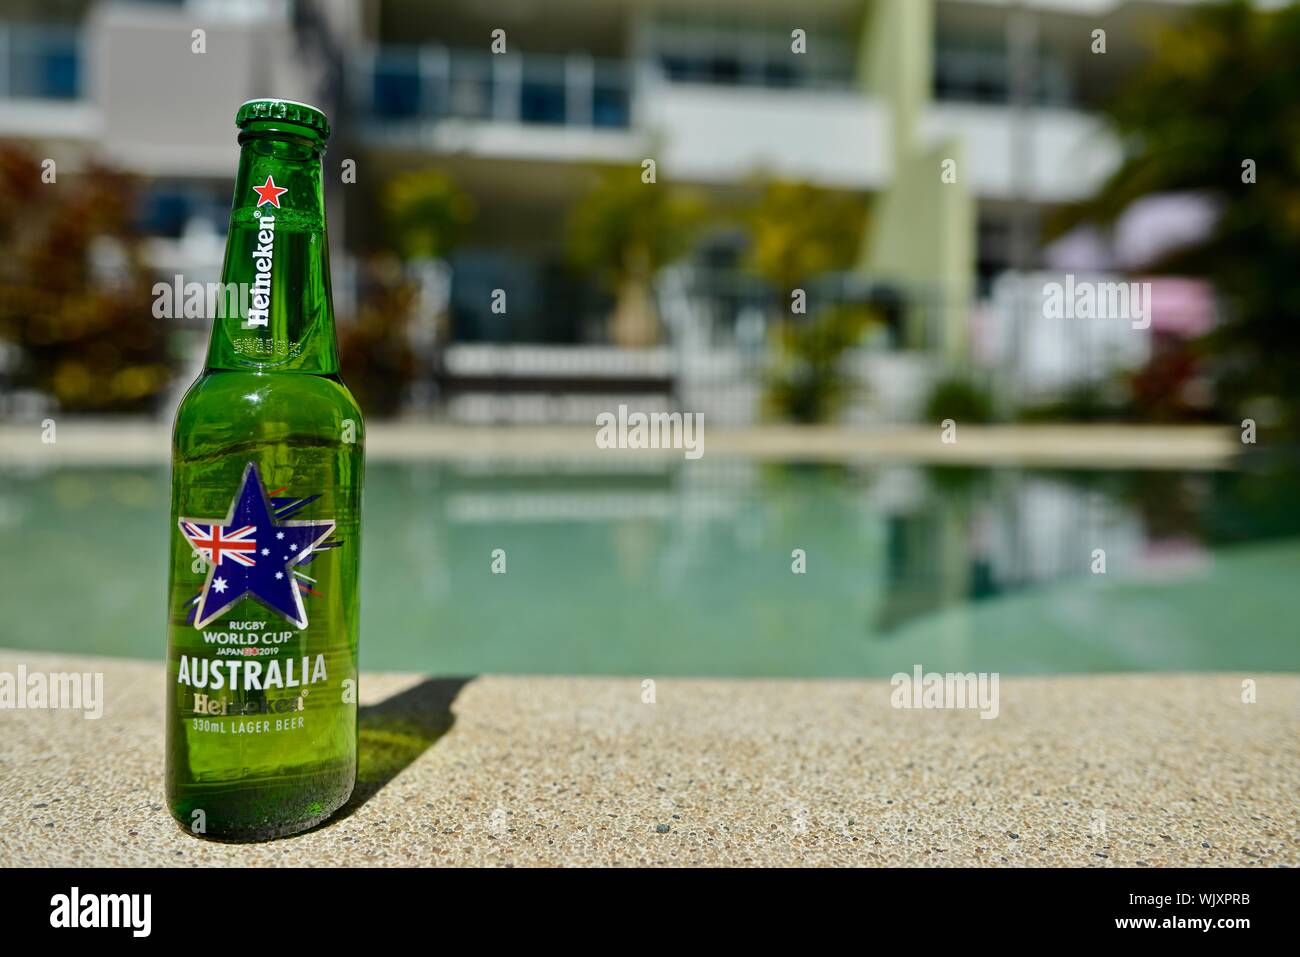 Australia, Heineken 2019 Japan Rugby world cup beer bottle Stock Photo